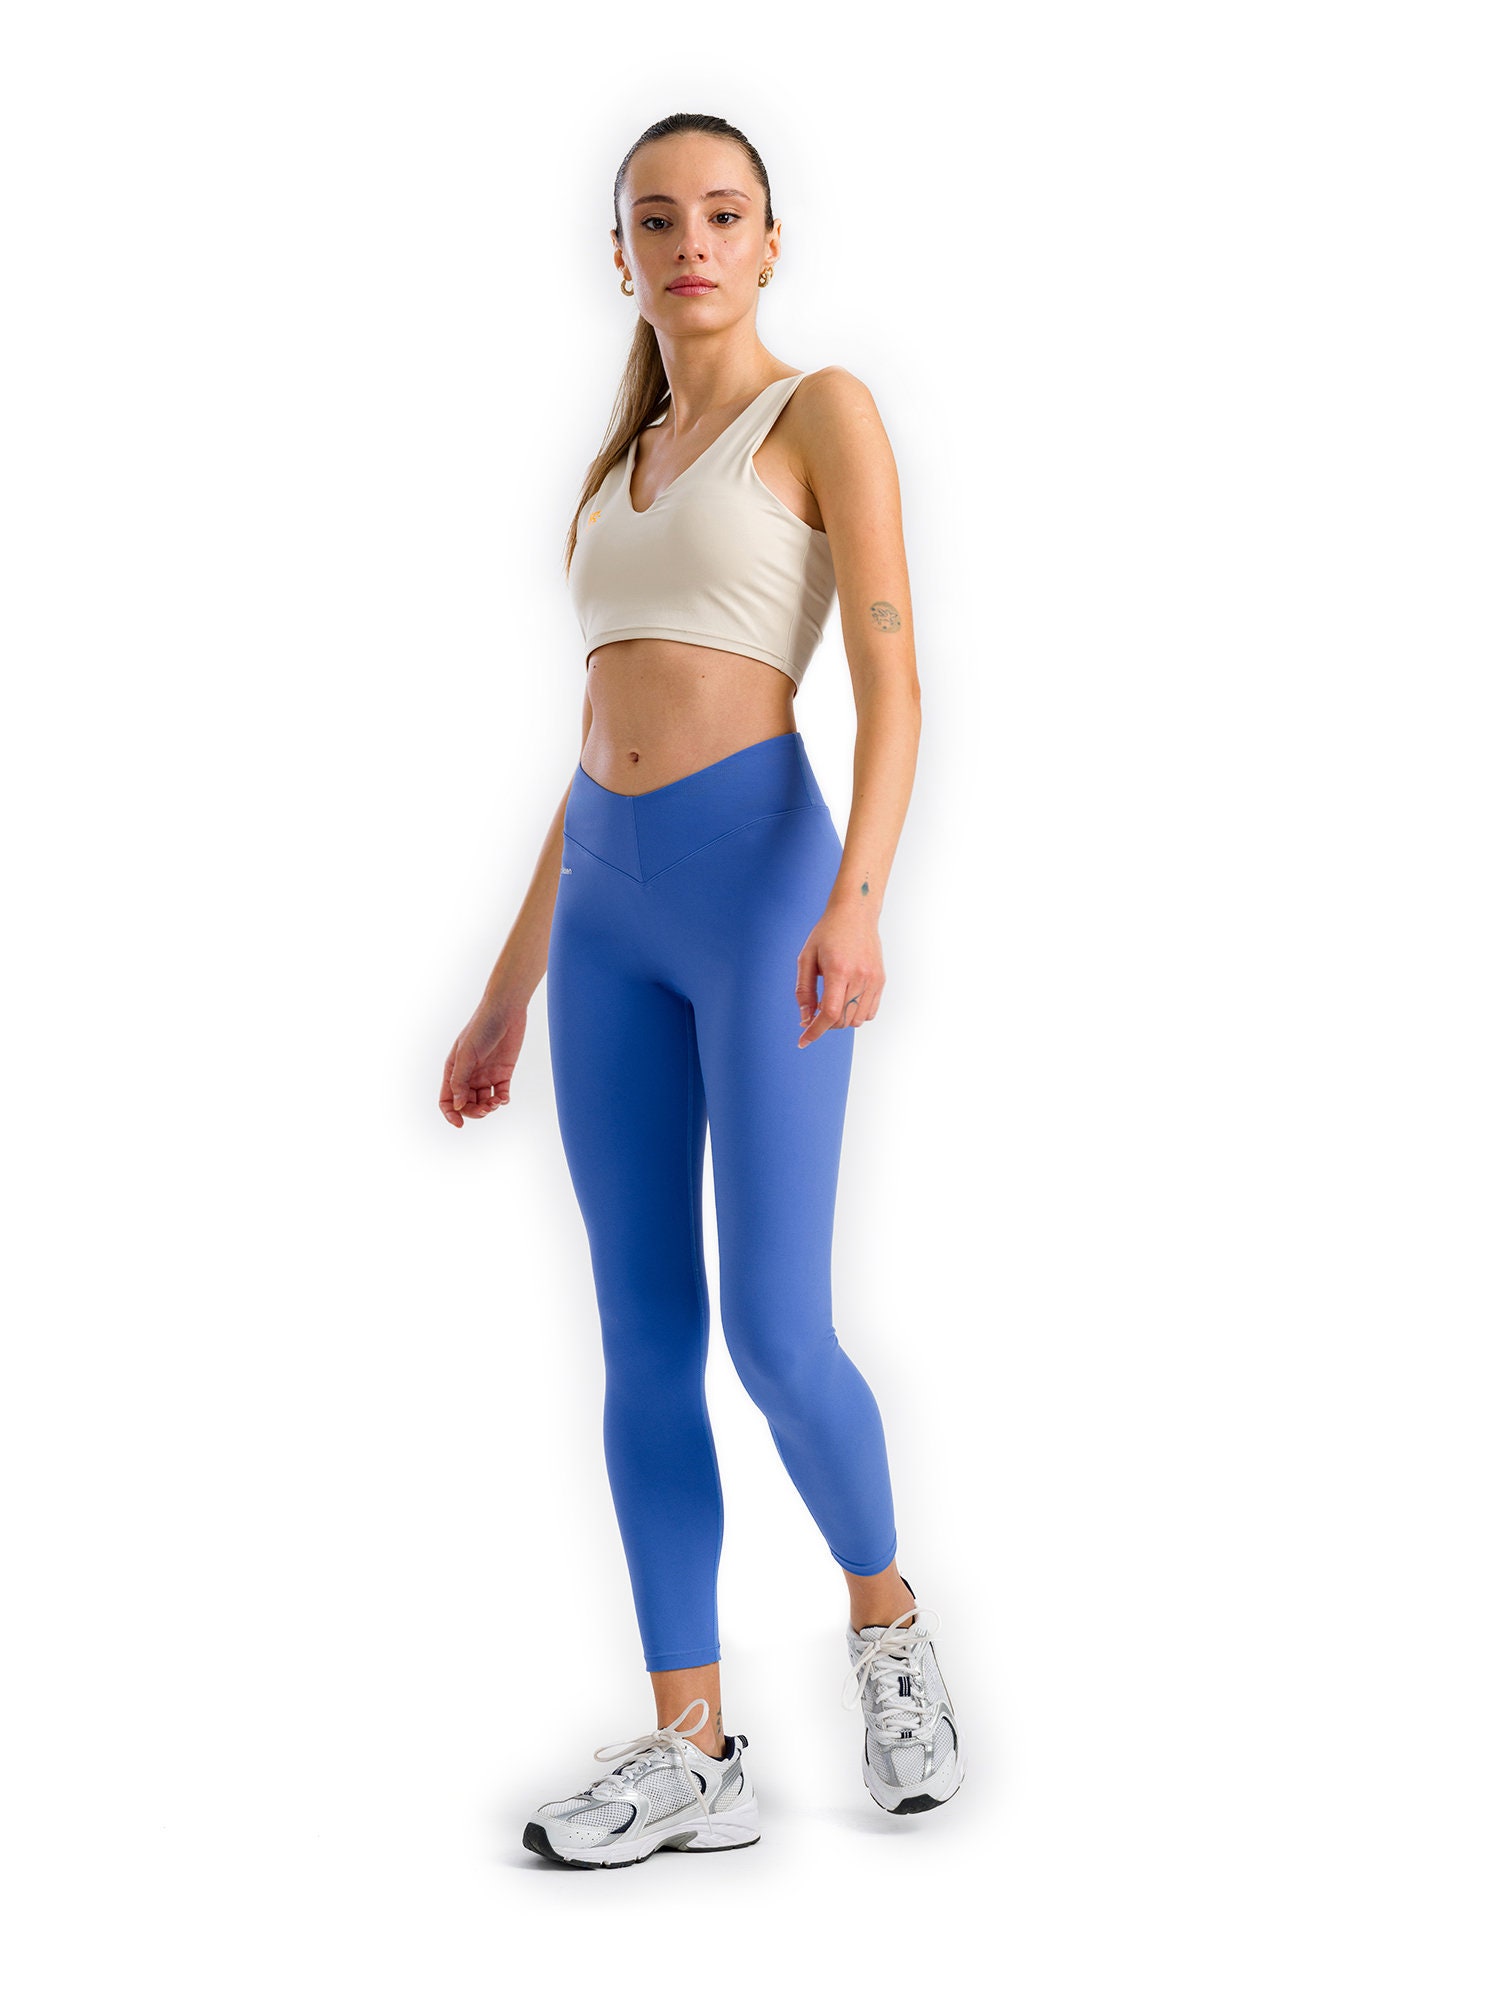 Sport Leggings Yoga Pants Cross Waist Cargo Pockets Butt Lift